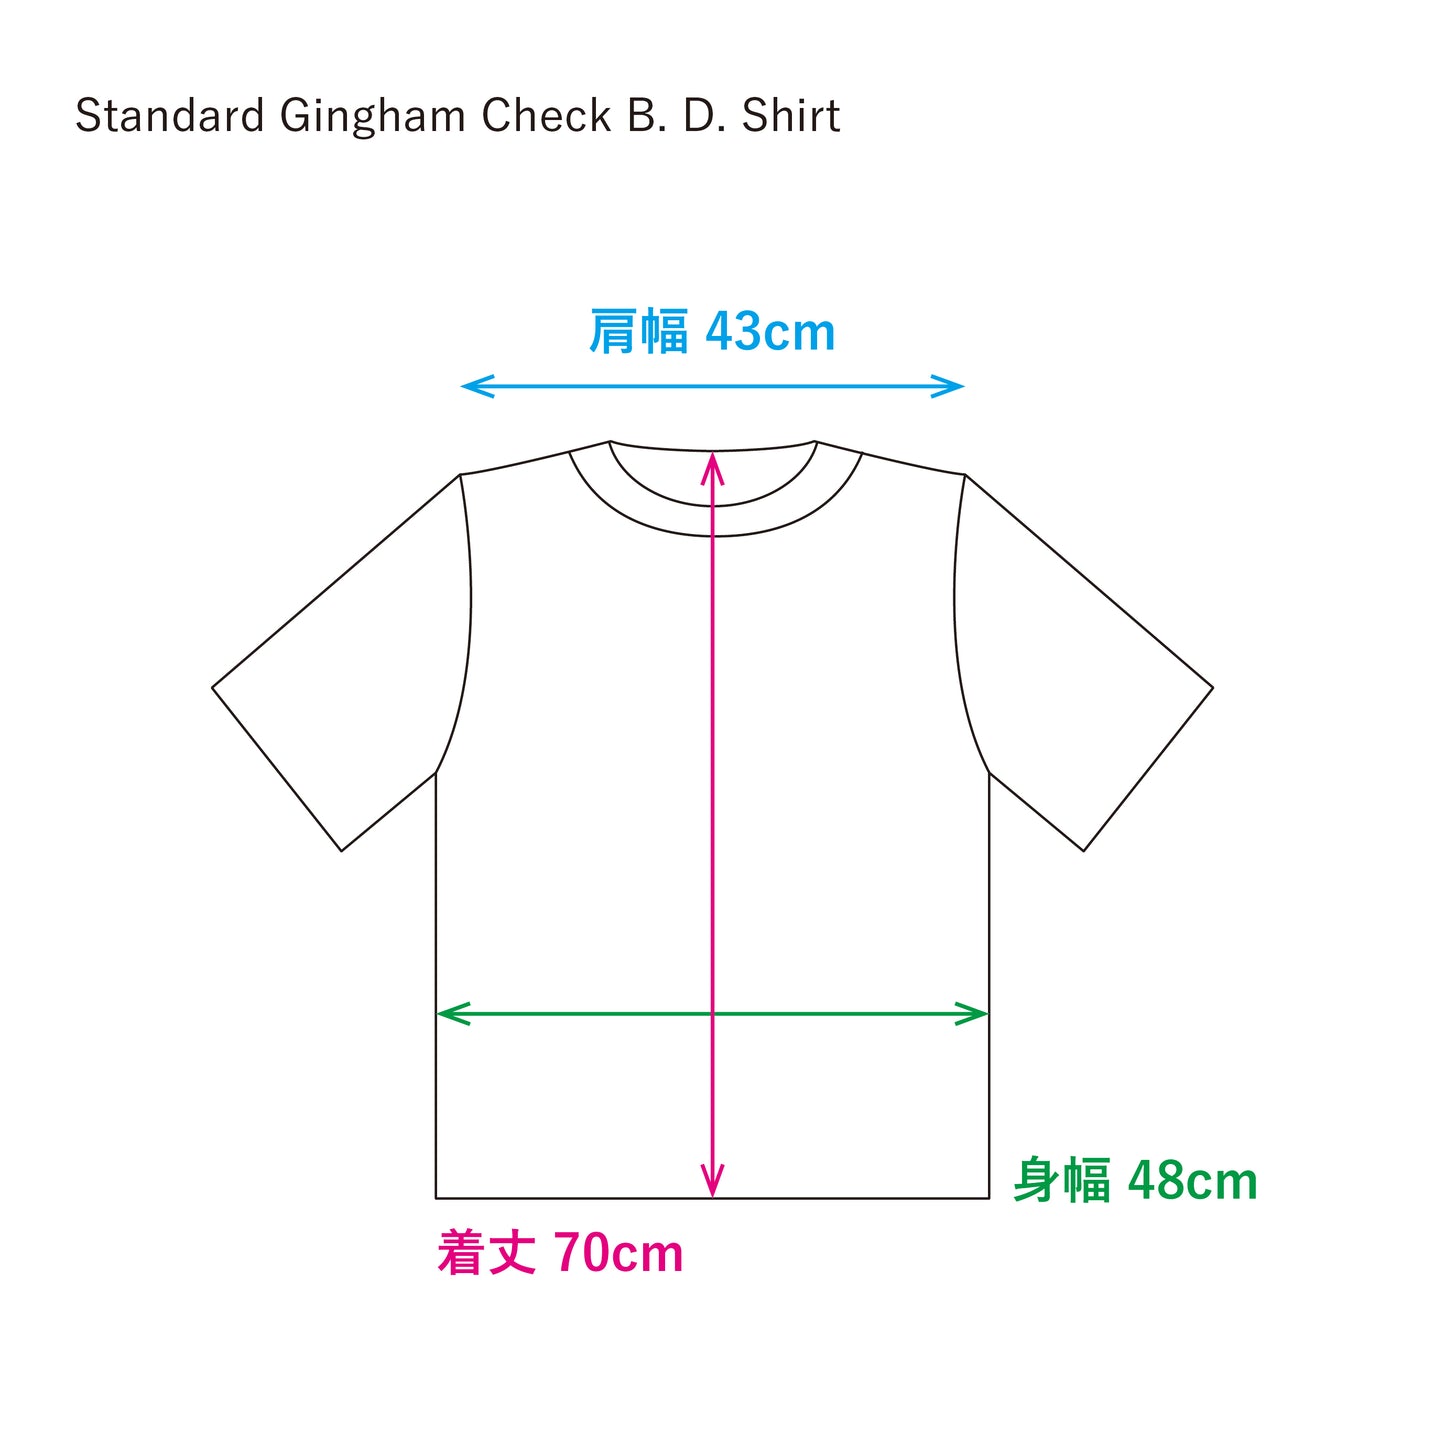 Standard Gingham Check B. D. Shirt